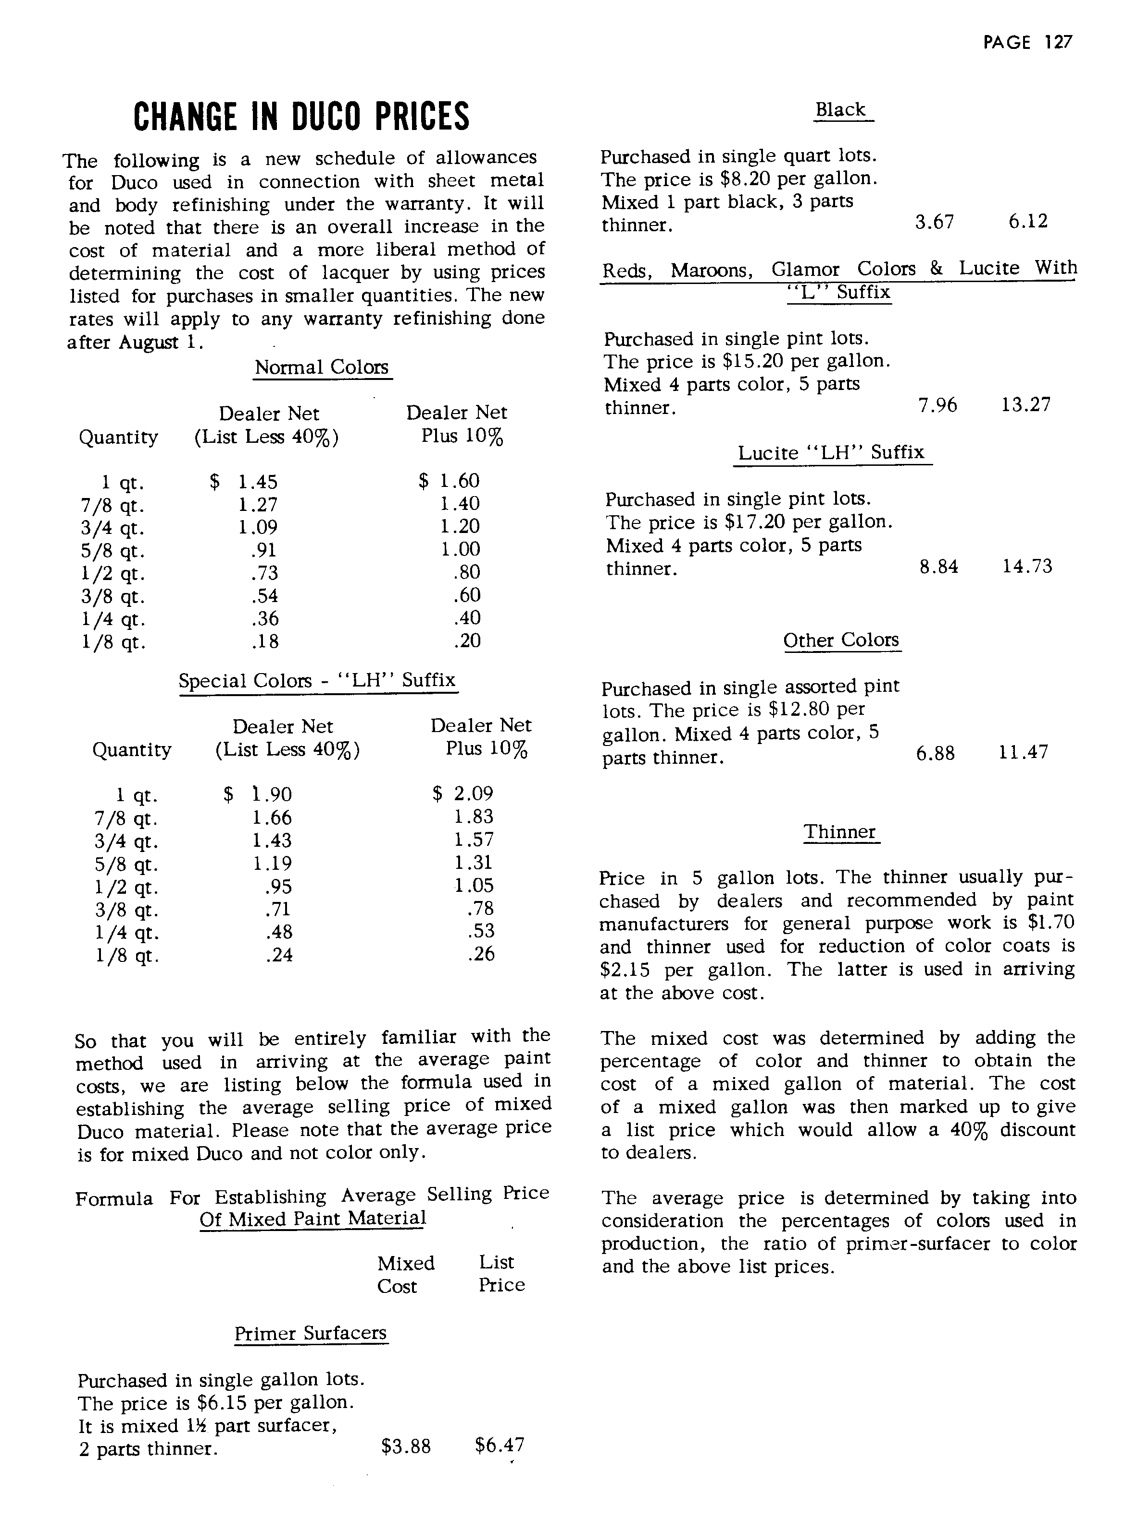 n_1957 Buick Product Service  Bulletins-128-128.jpg